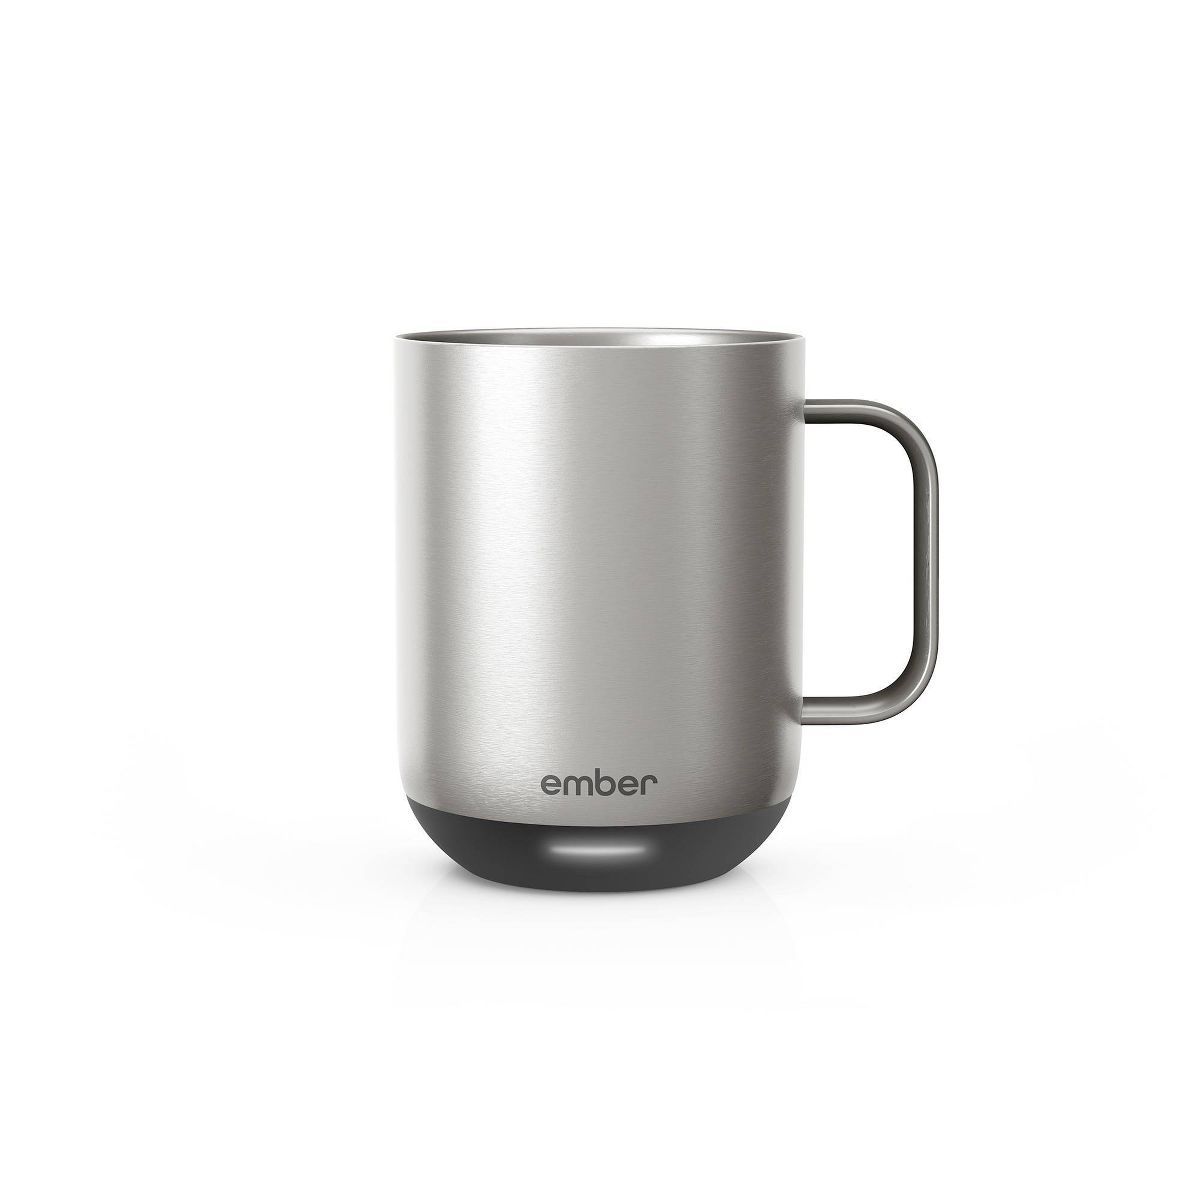 Ember Mug² Temperature Control Smart Mug 10oz - Stainless Steel | Target